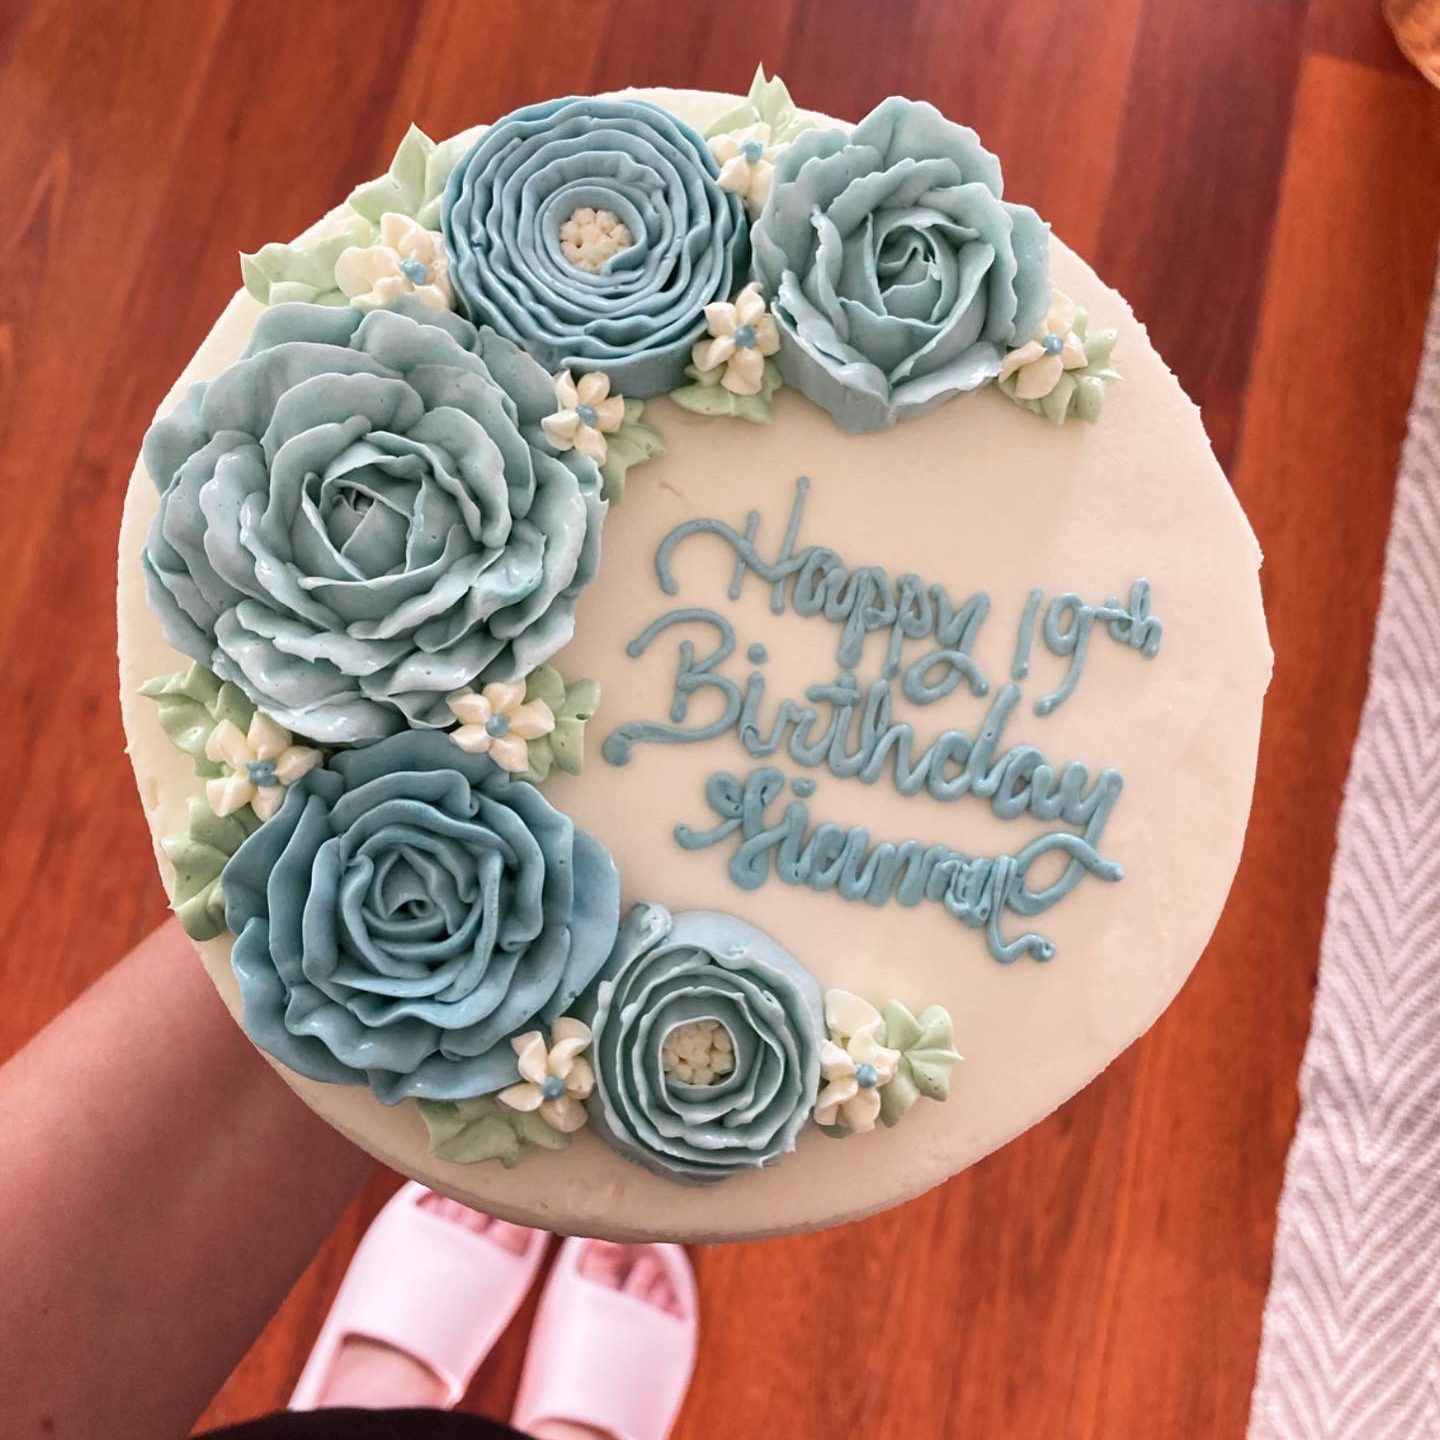 Happy birthday cake with blue flowers